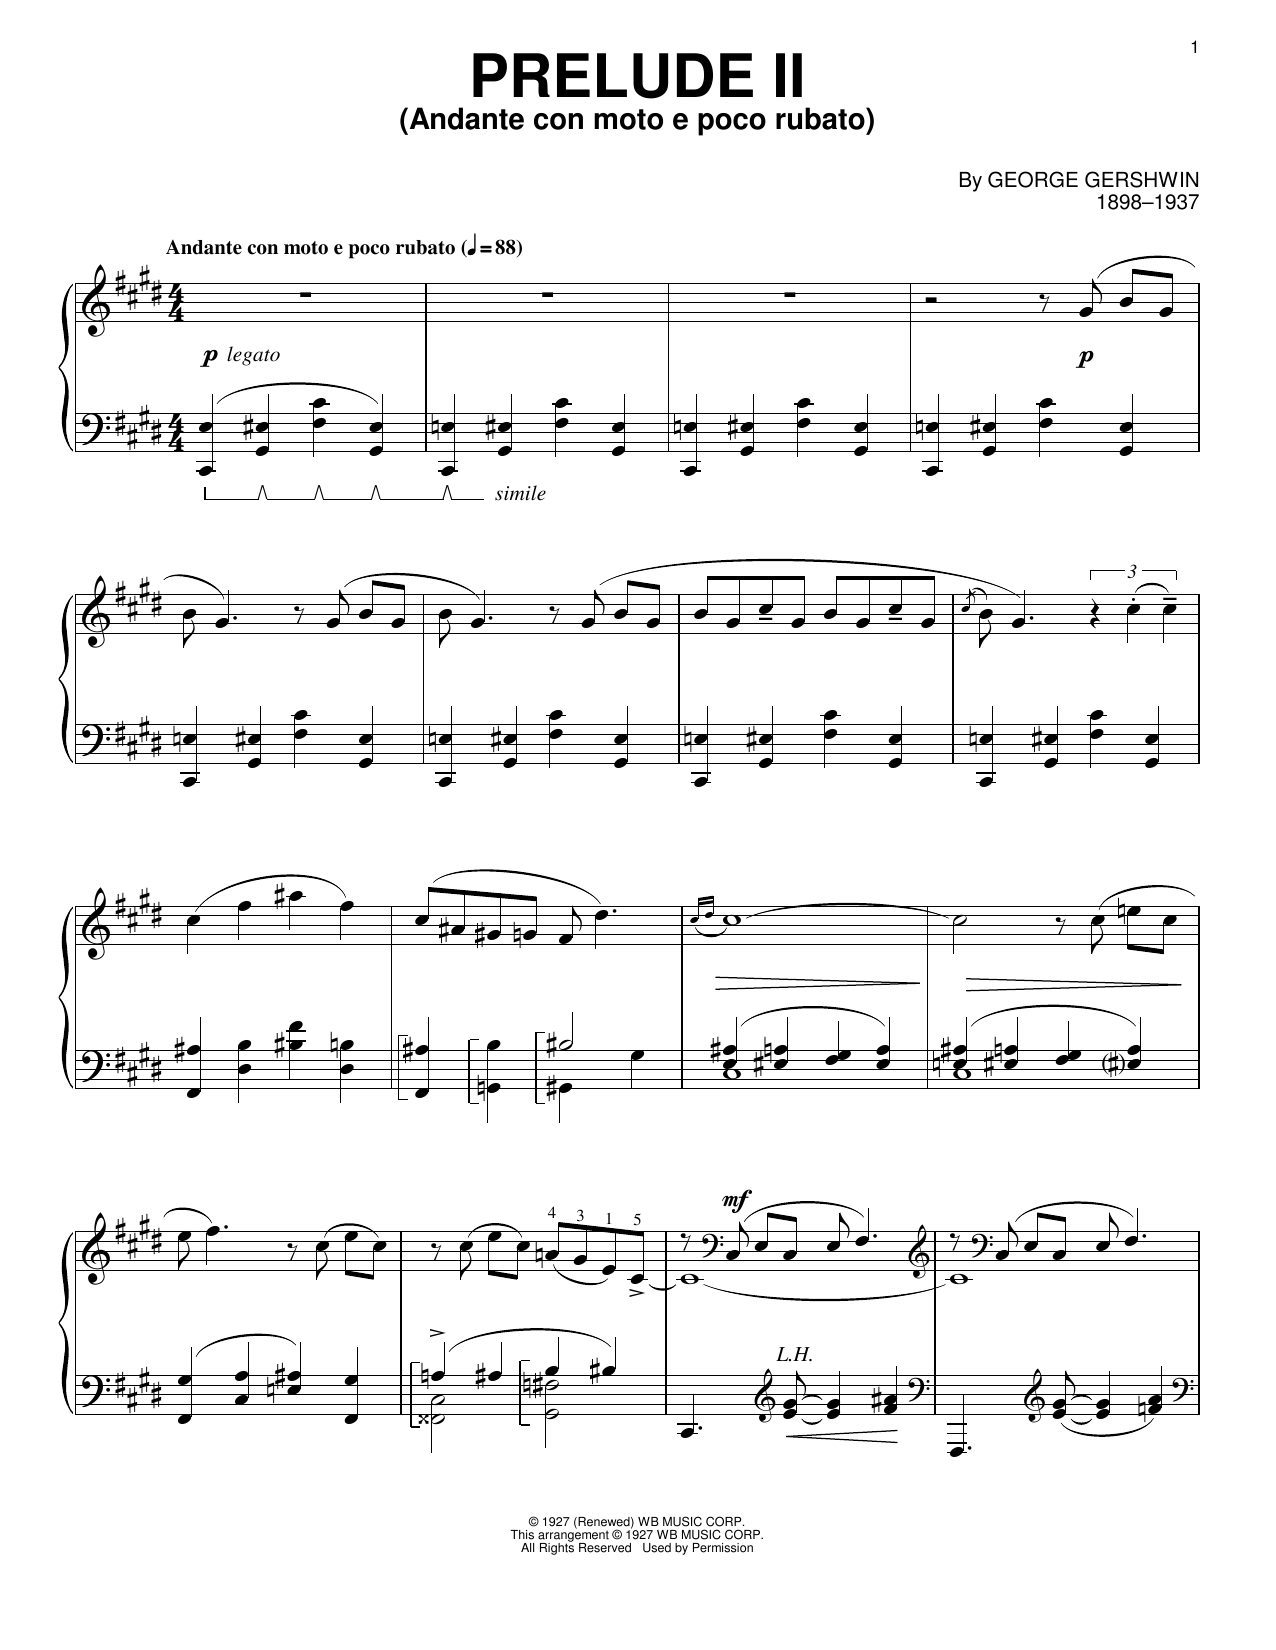 Download George Gershwin Prelude II (Andante Con Moto E Poco Rubato) Sheet Music and learn how to play Piano PDF digital score in minutes